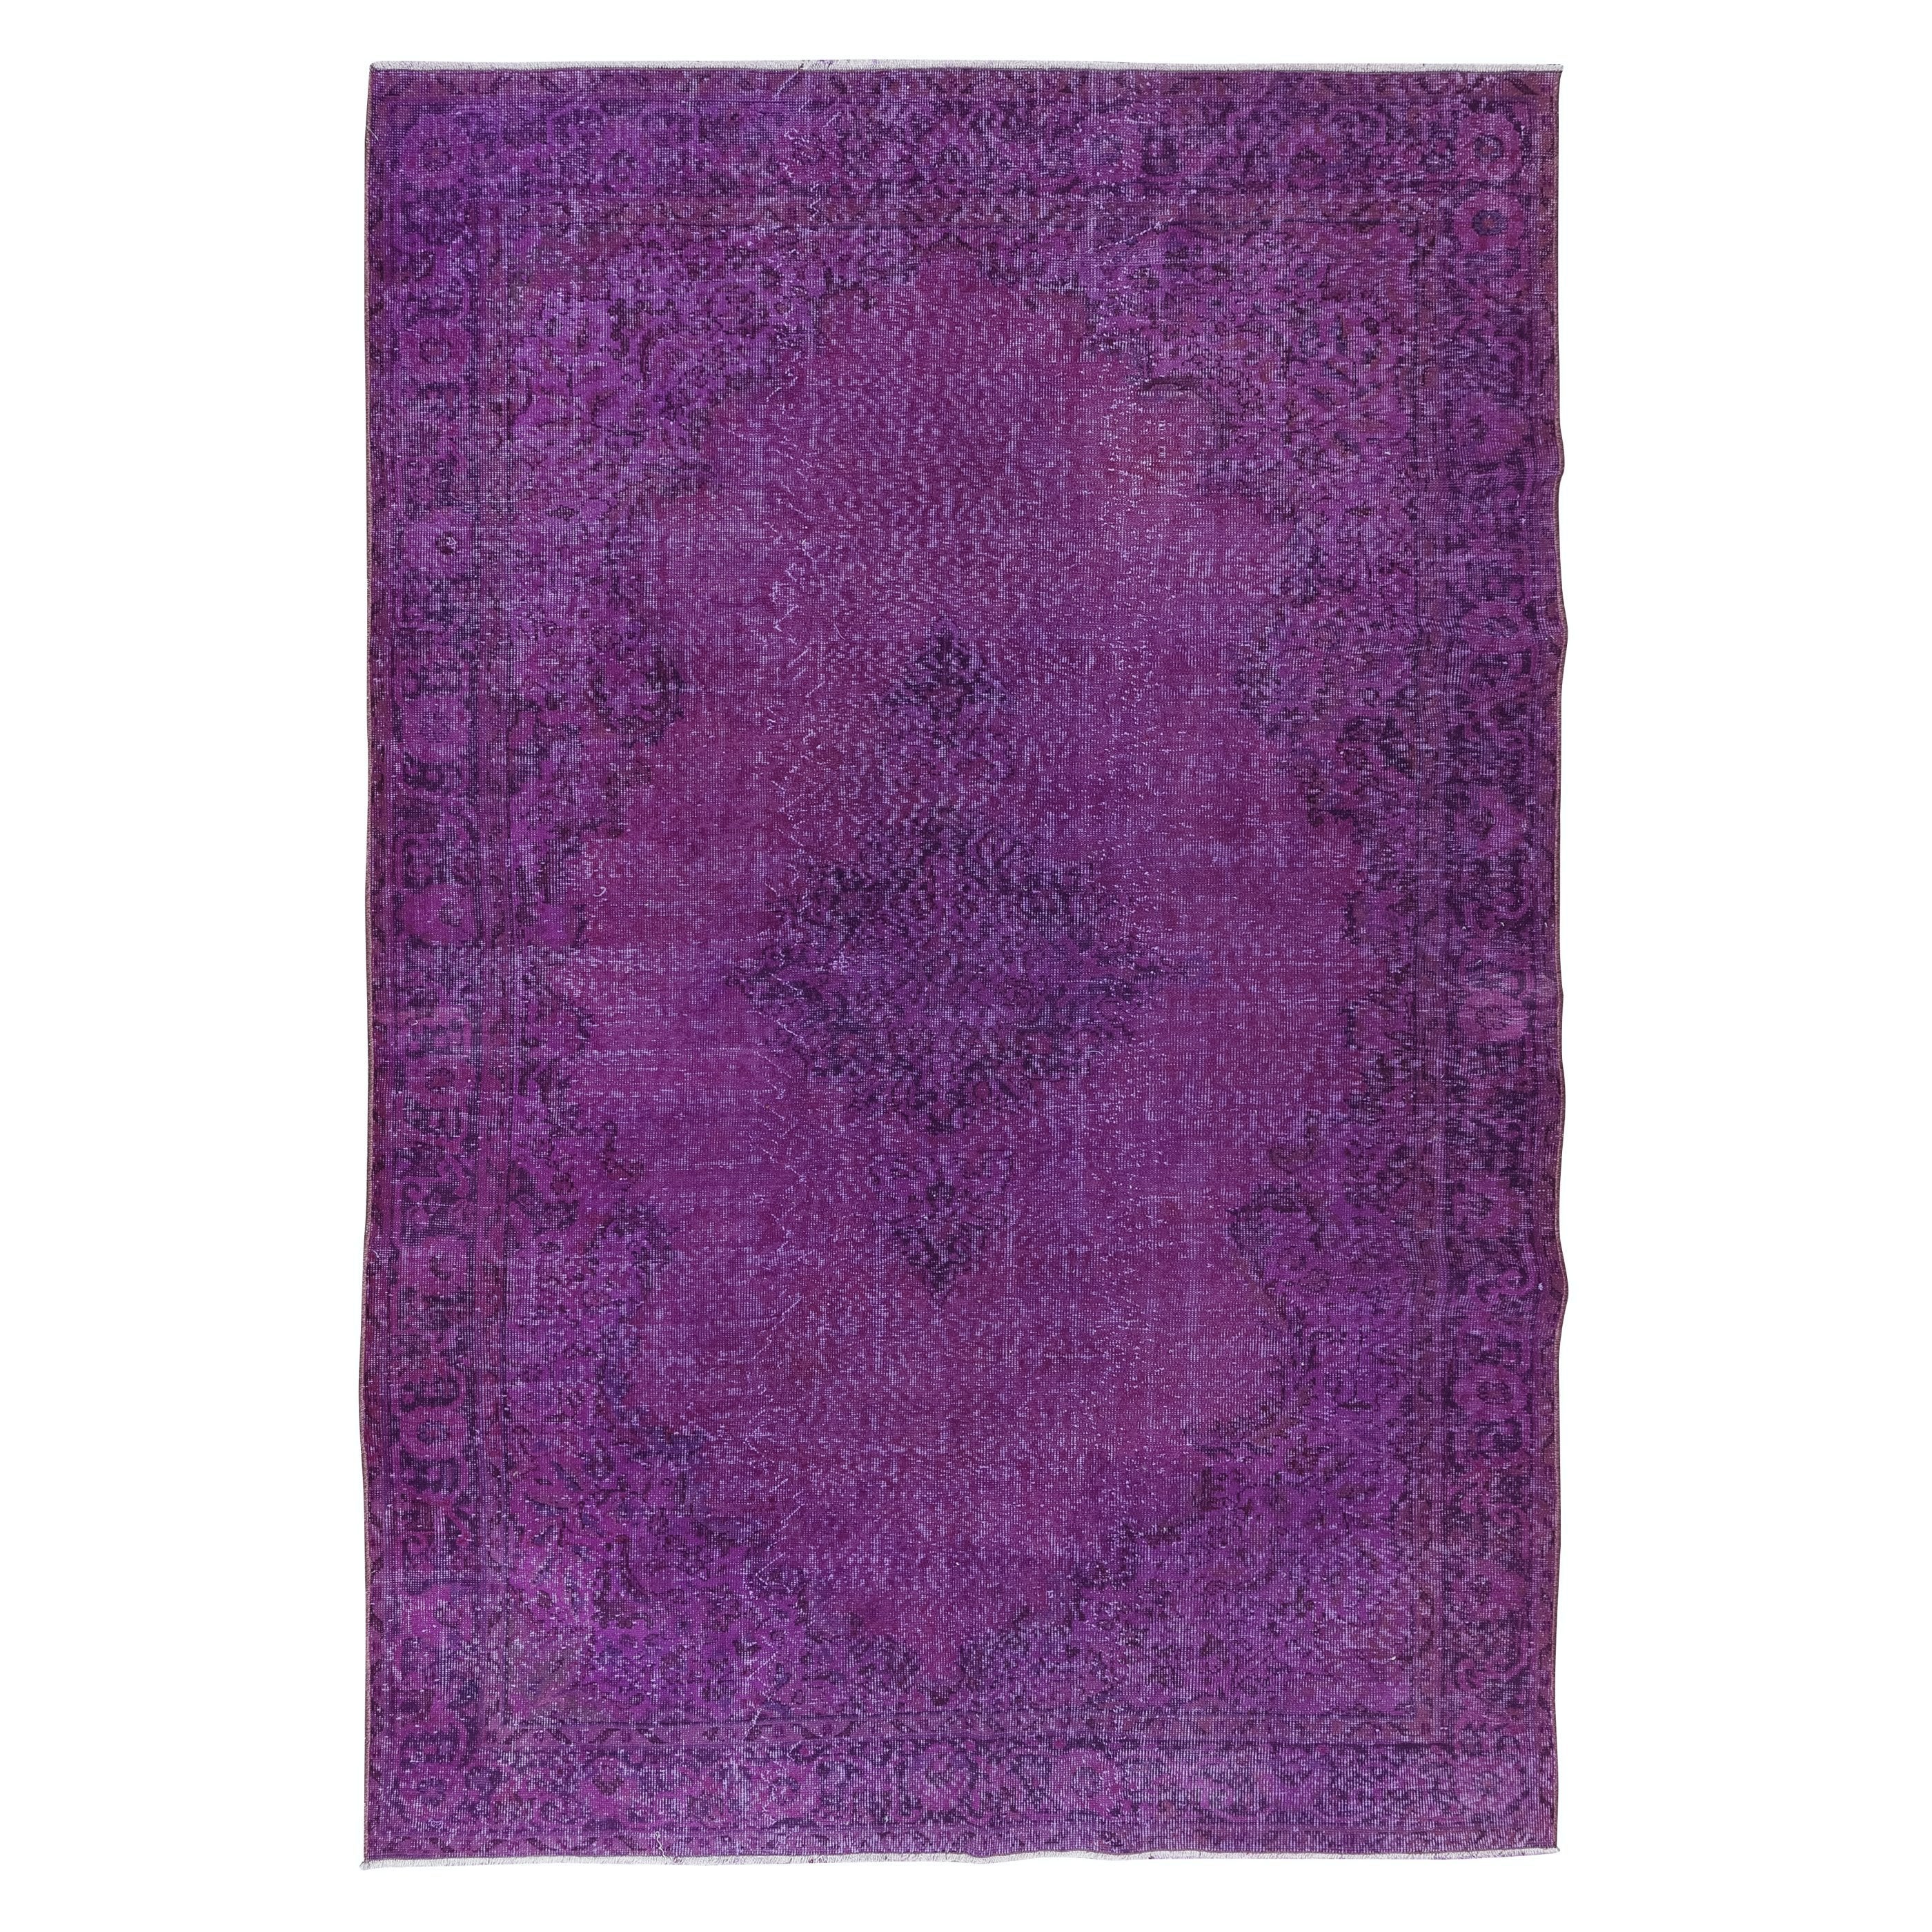 7x10 Ft Handmade Turkish Purple Area Rug, Ideal for Modern Interiors